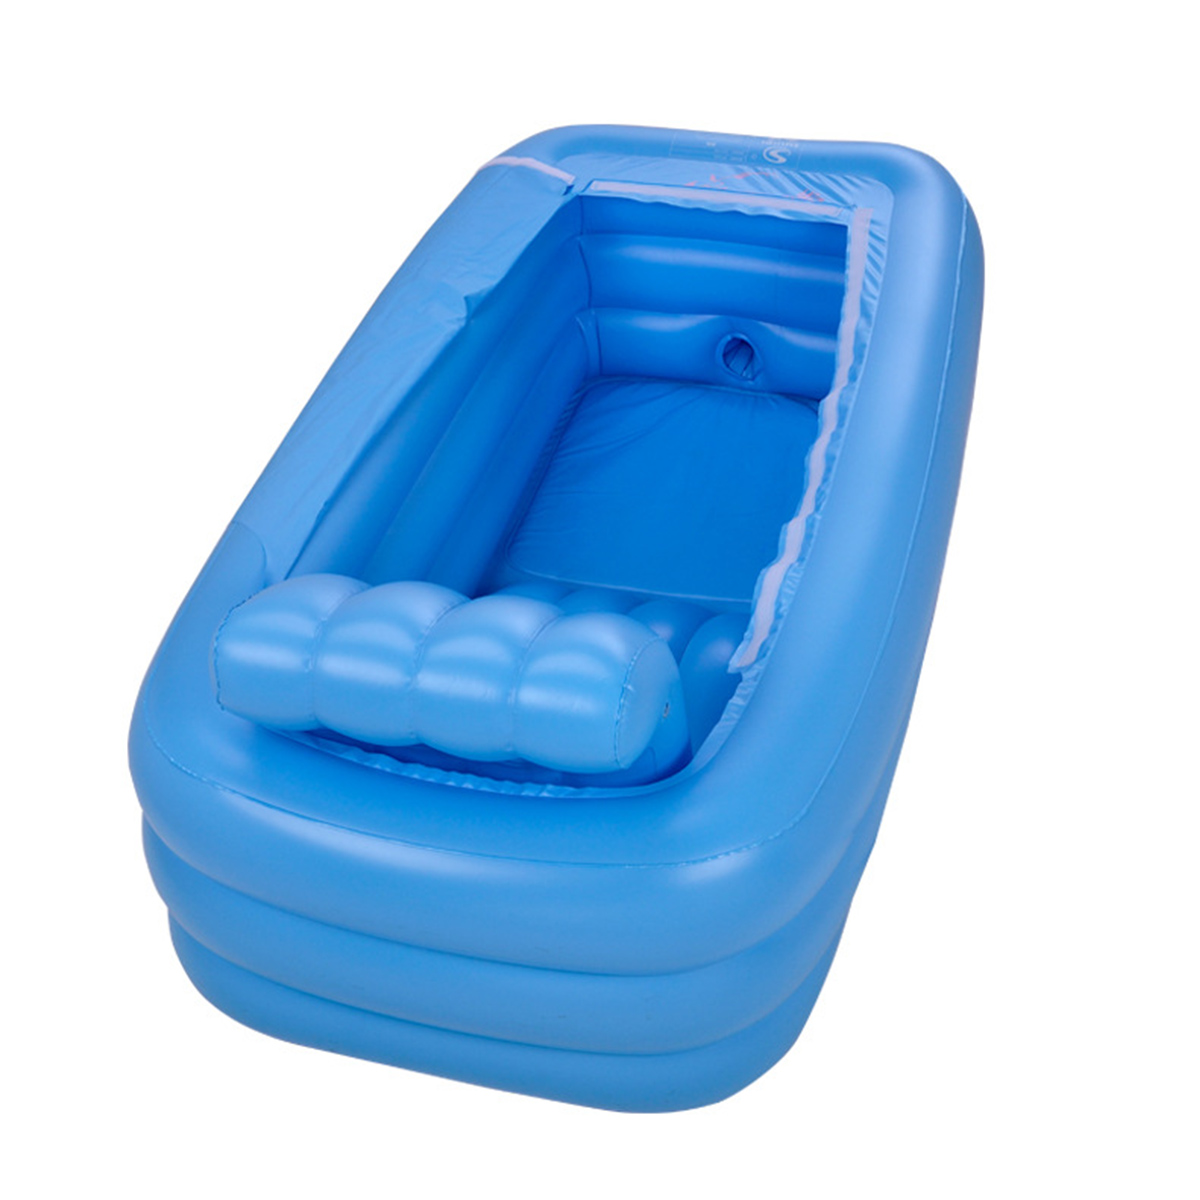 Portable Inflatable Bathtub Home Thickening Folding Barrel Can Sit Lie Plastic PVC Inflatable Bath Tub Adults 165 x 85 x 45 cm